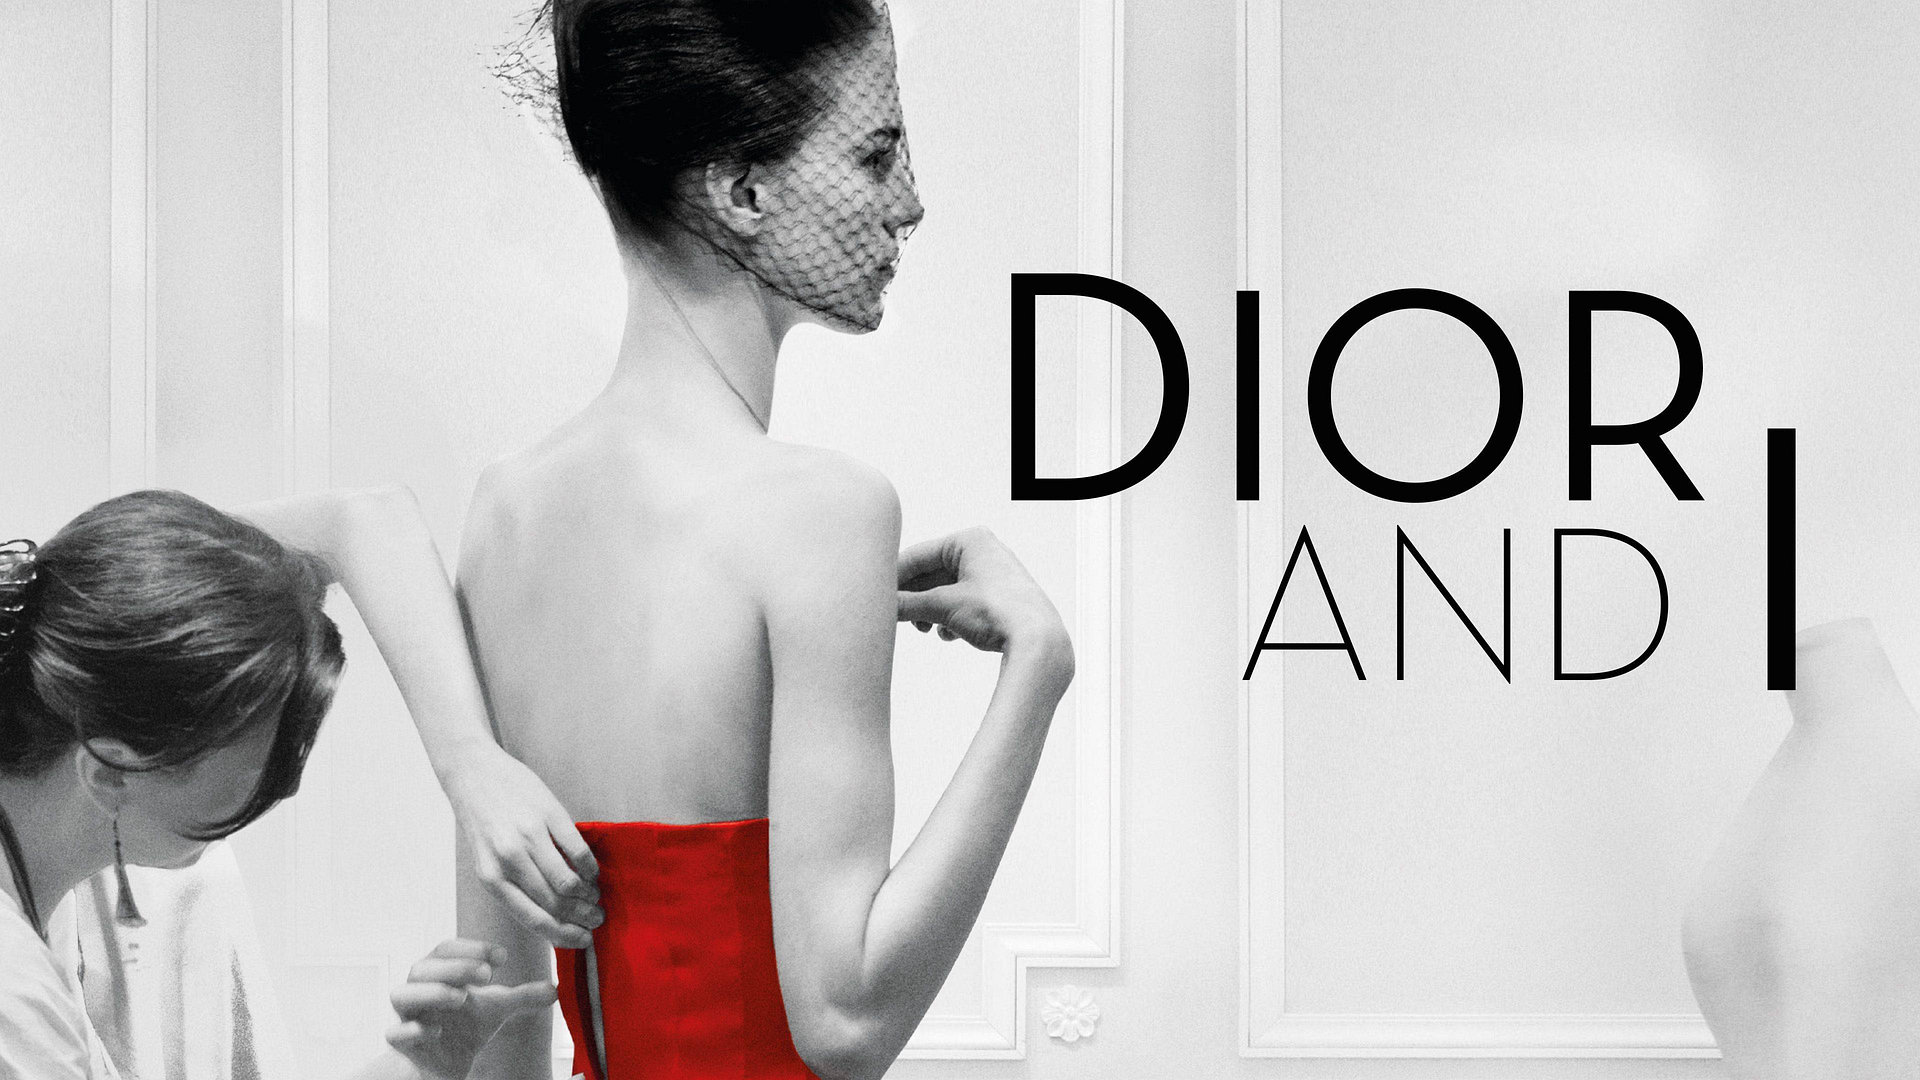 Dior and I